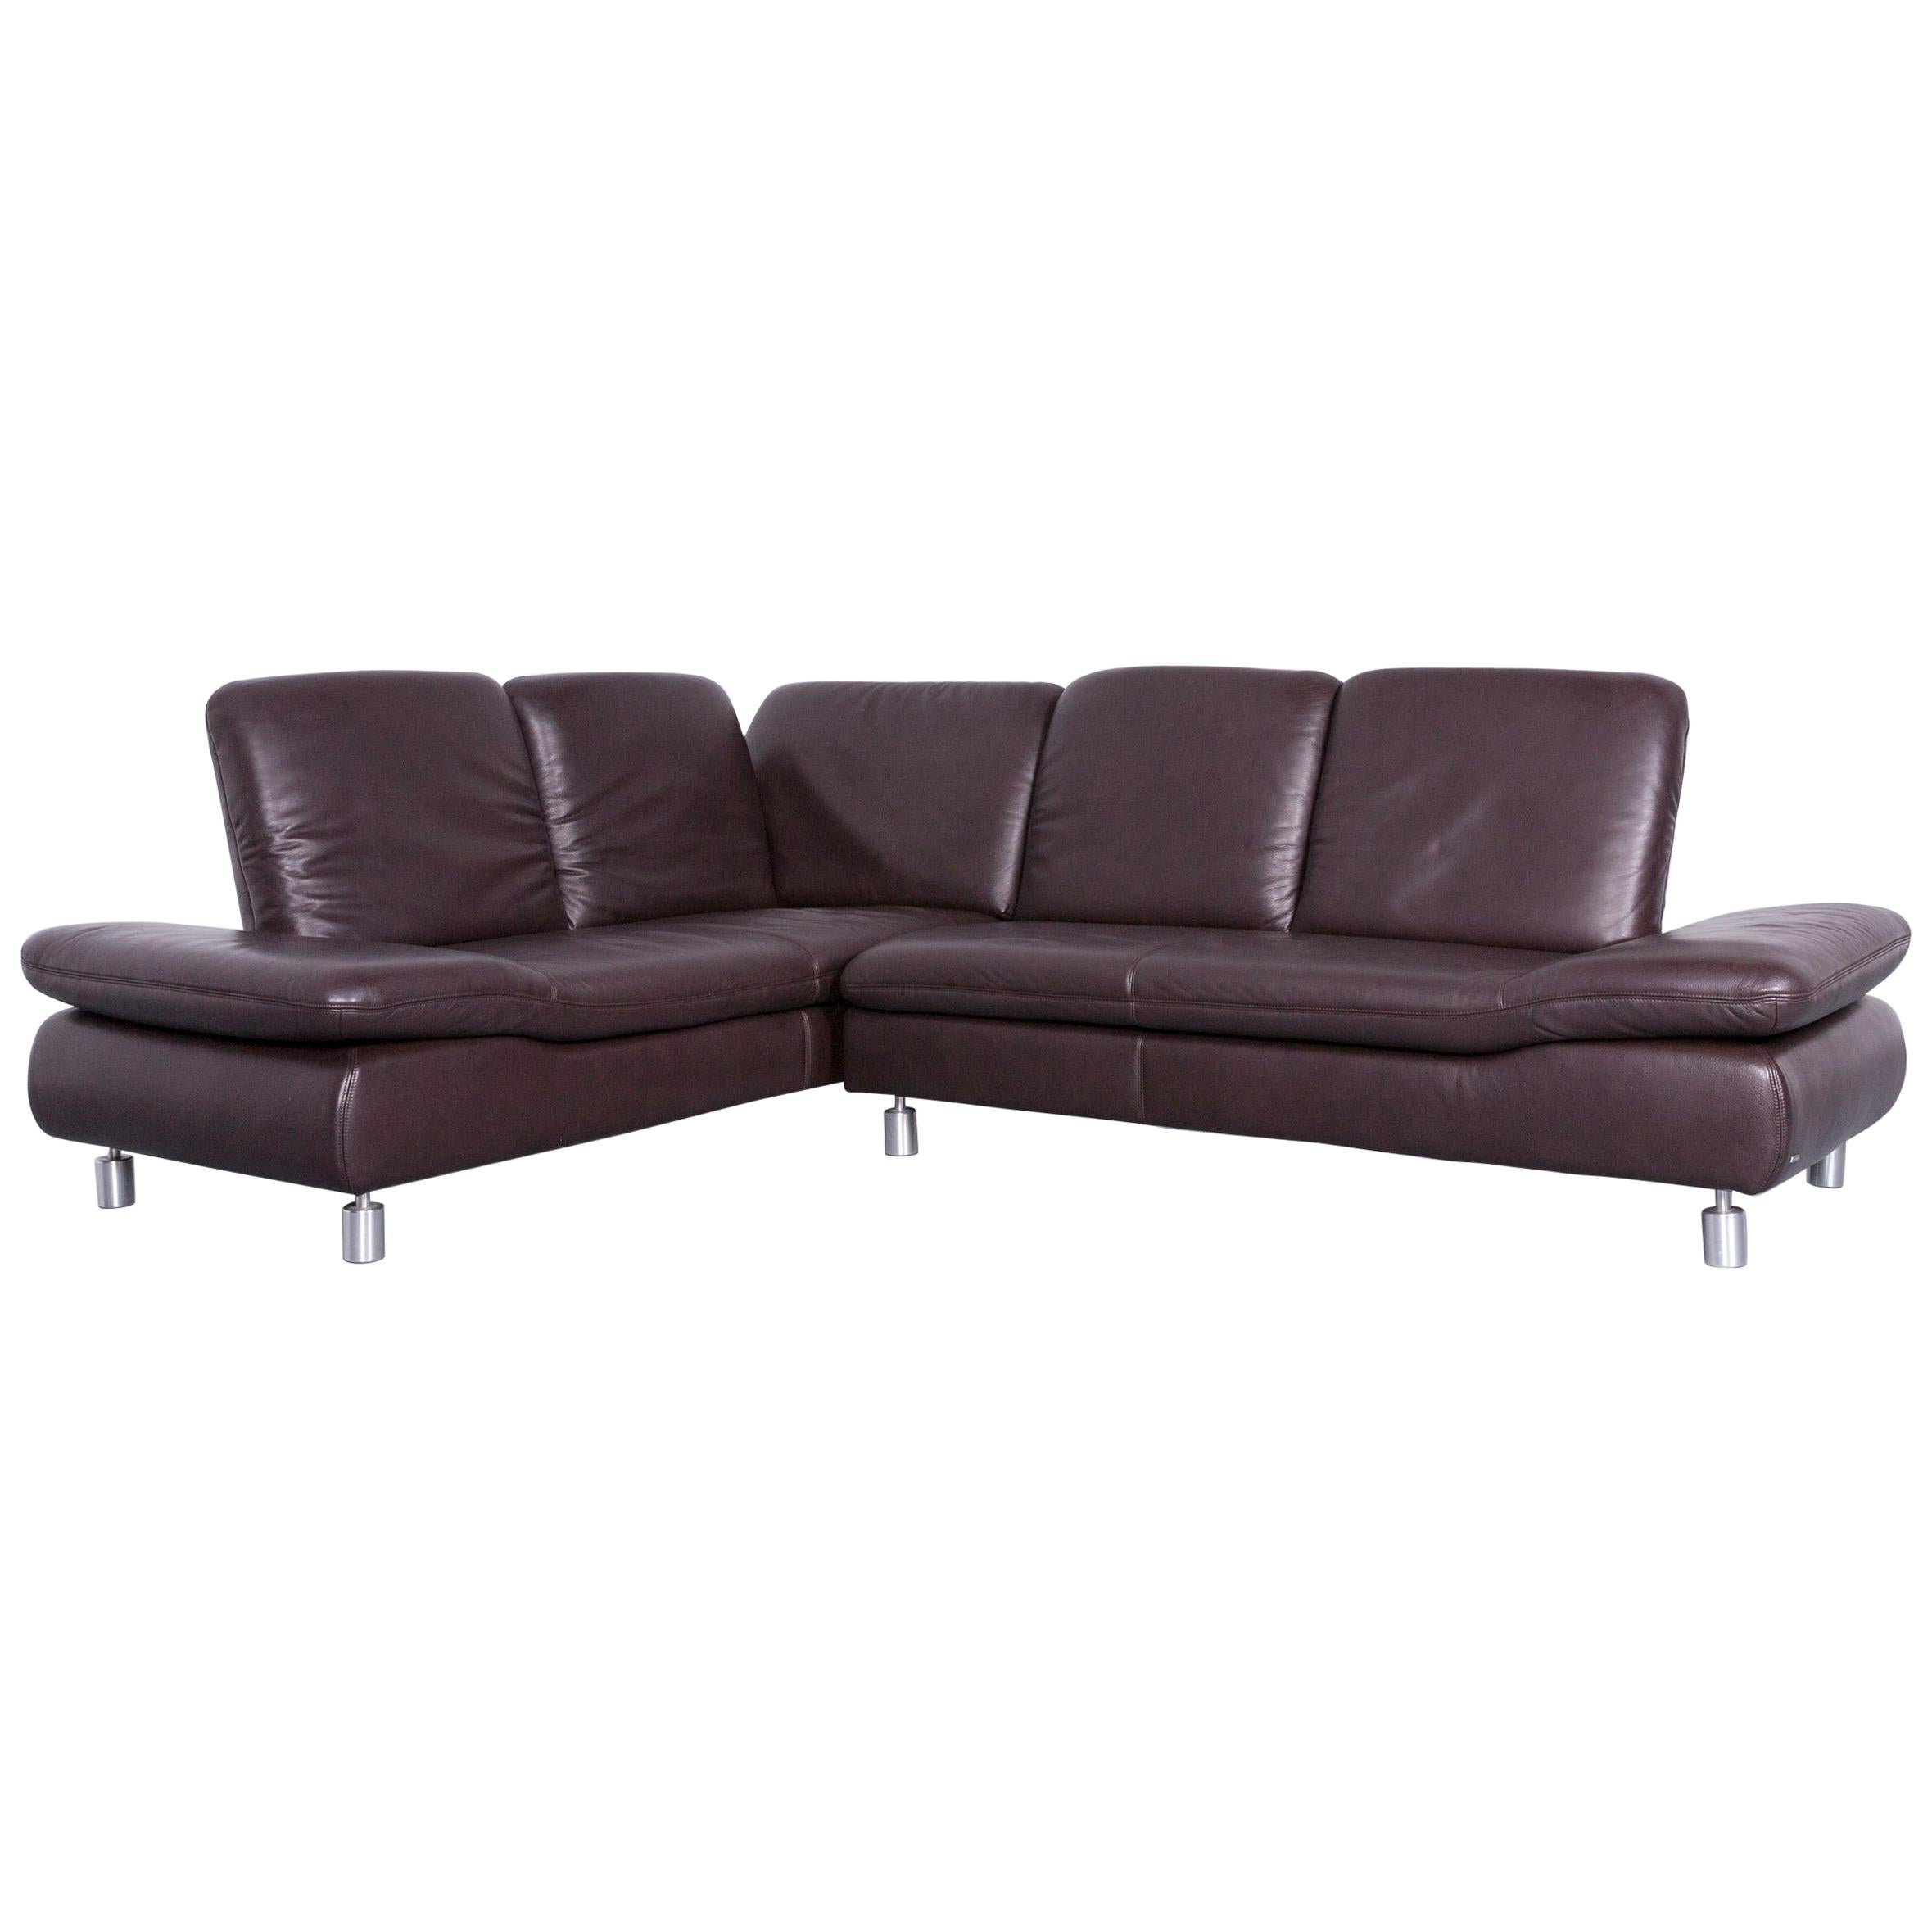 Koinor Rivoli Designer Leather Corner Sofa in Brown with Functions